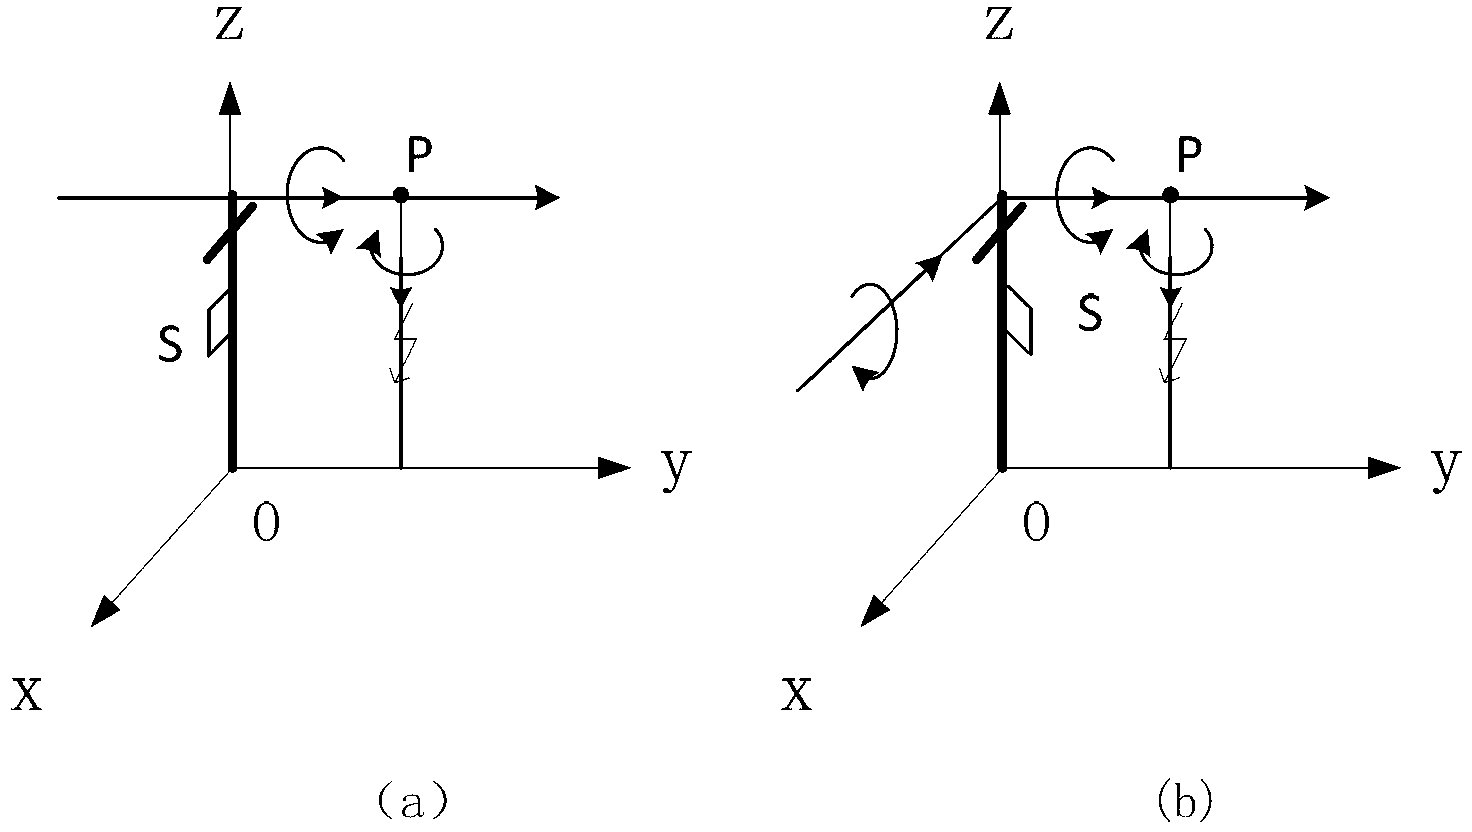 Overhead power distribution line single-phase grounding fault positioning method